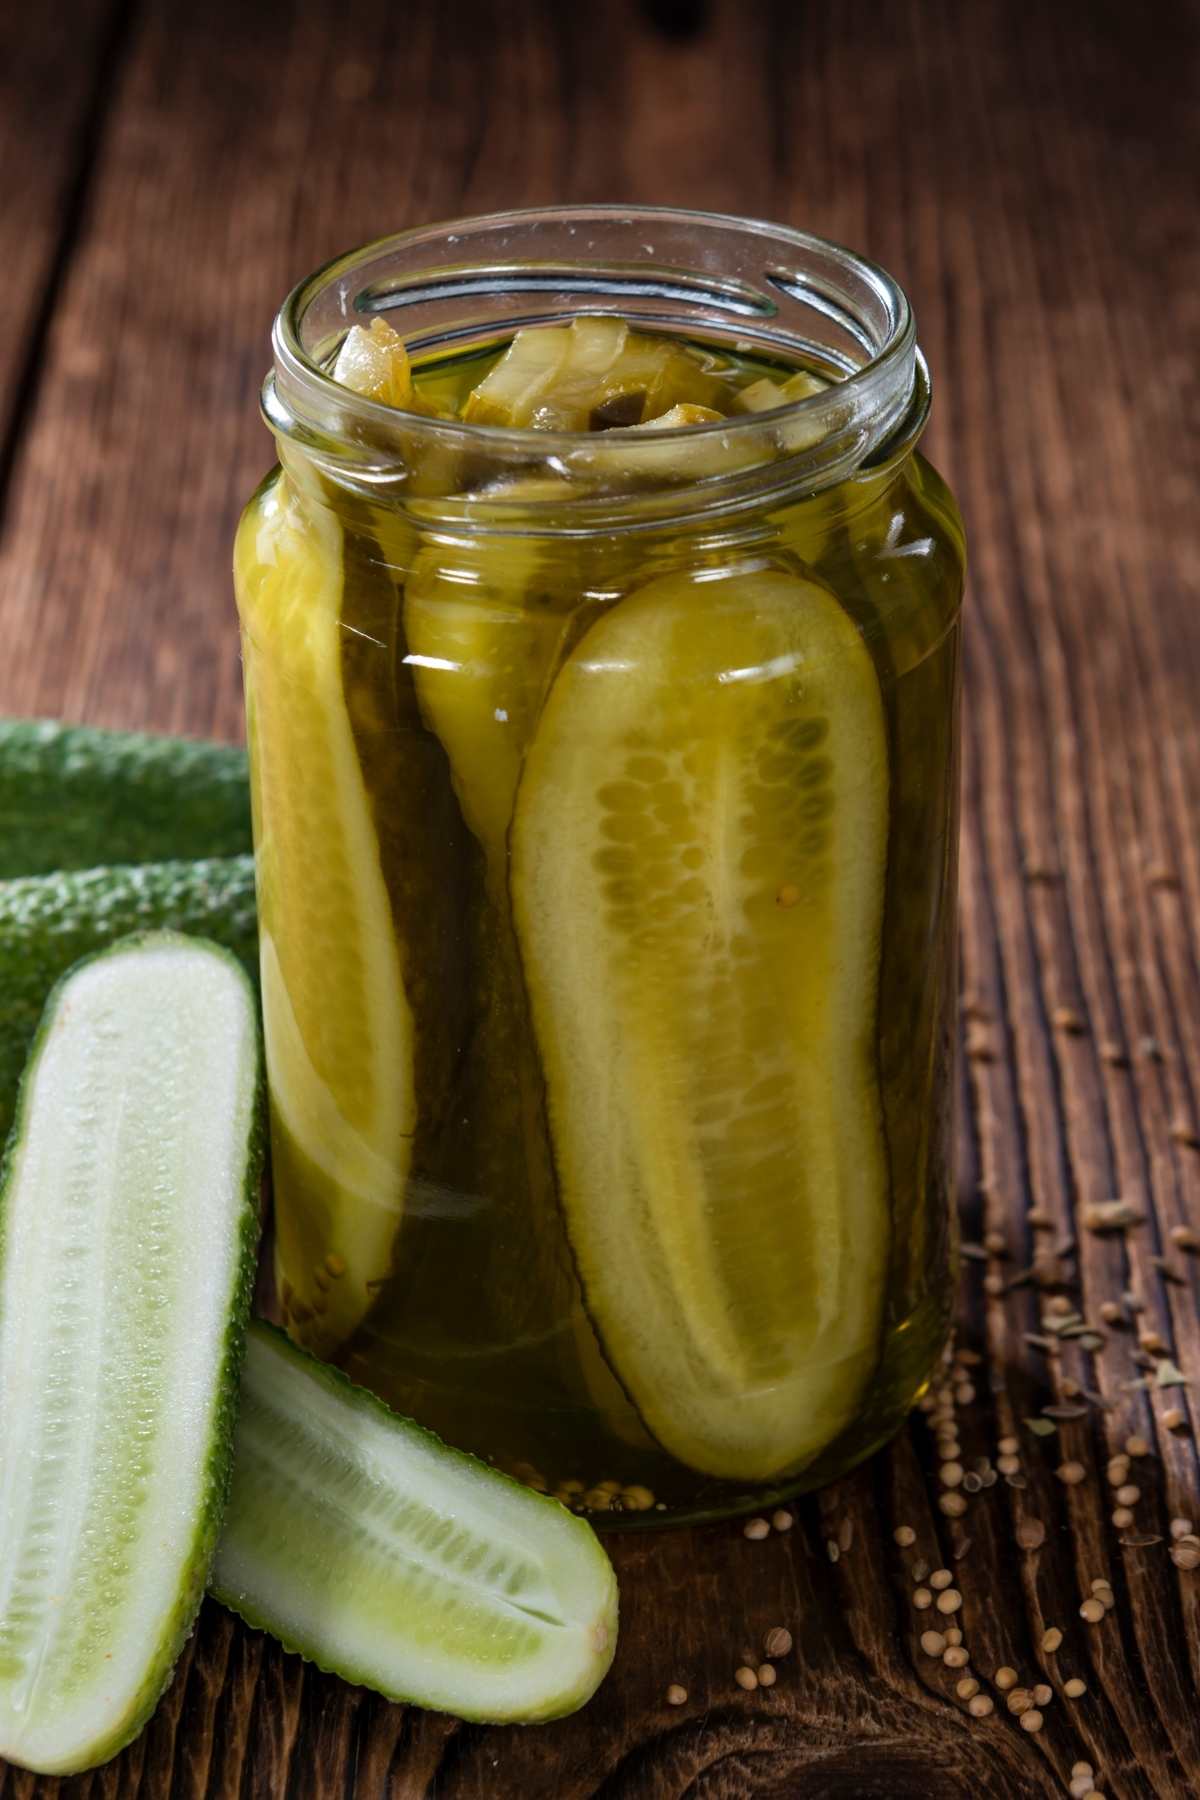 Pickled Cucumber Slices